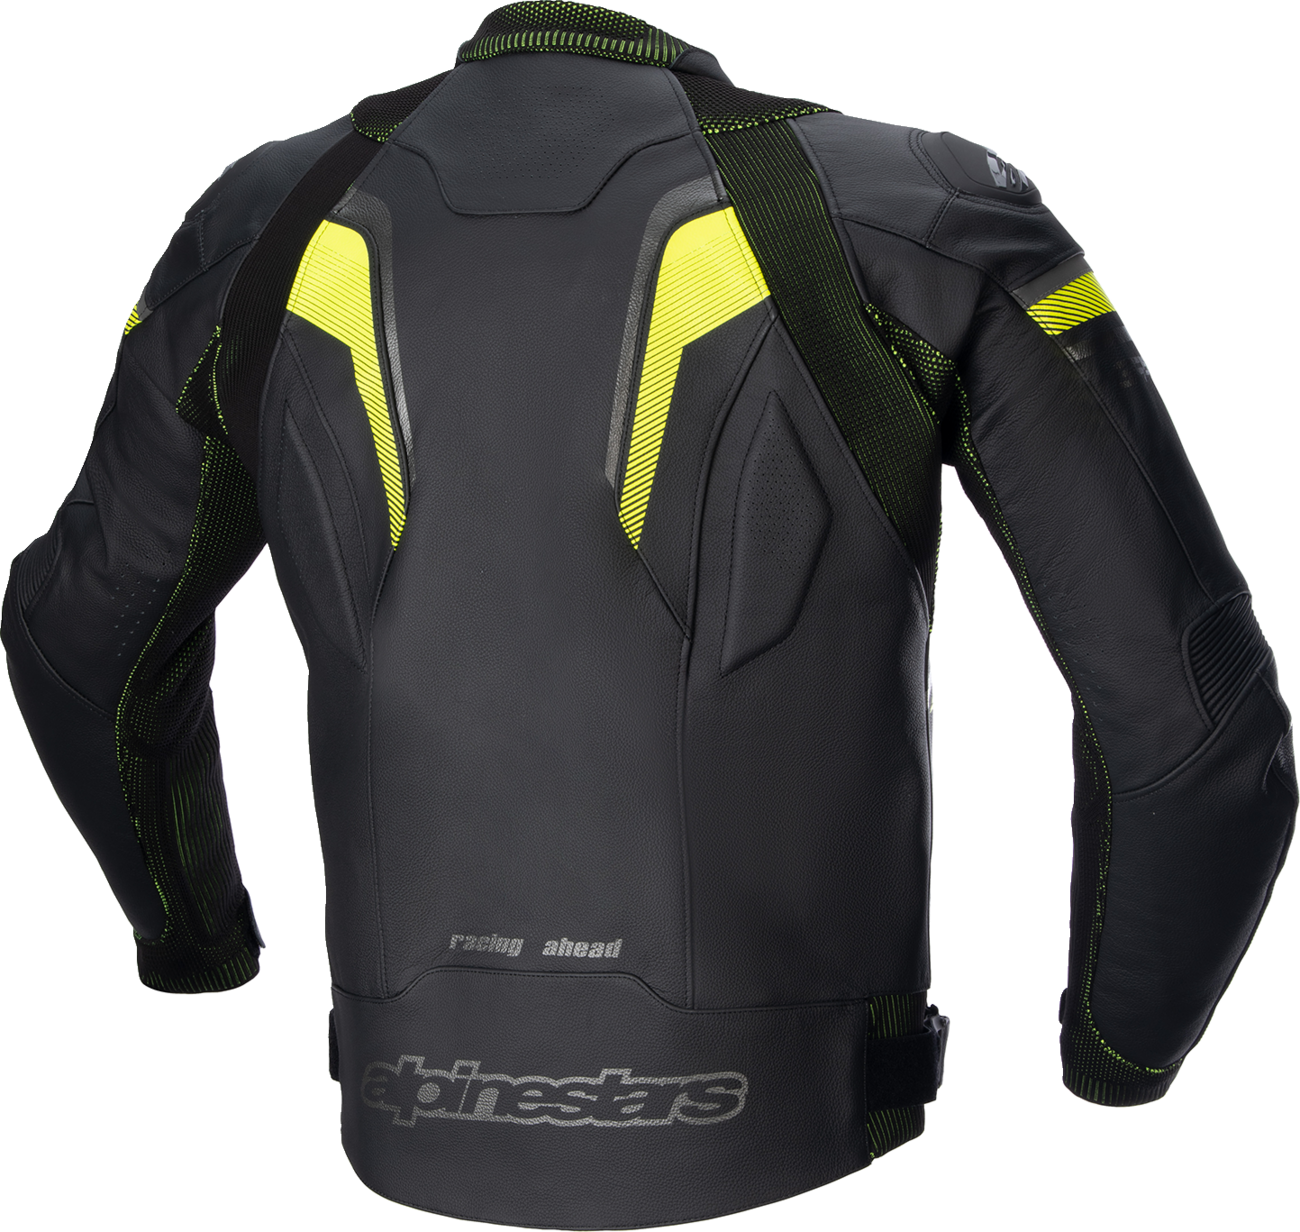 ALPINESTARS GP Plus R v3 Rideknit Leather Jacket - Black/Yellow Fluo - US 40 / EU 50 310032115550